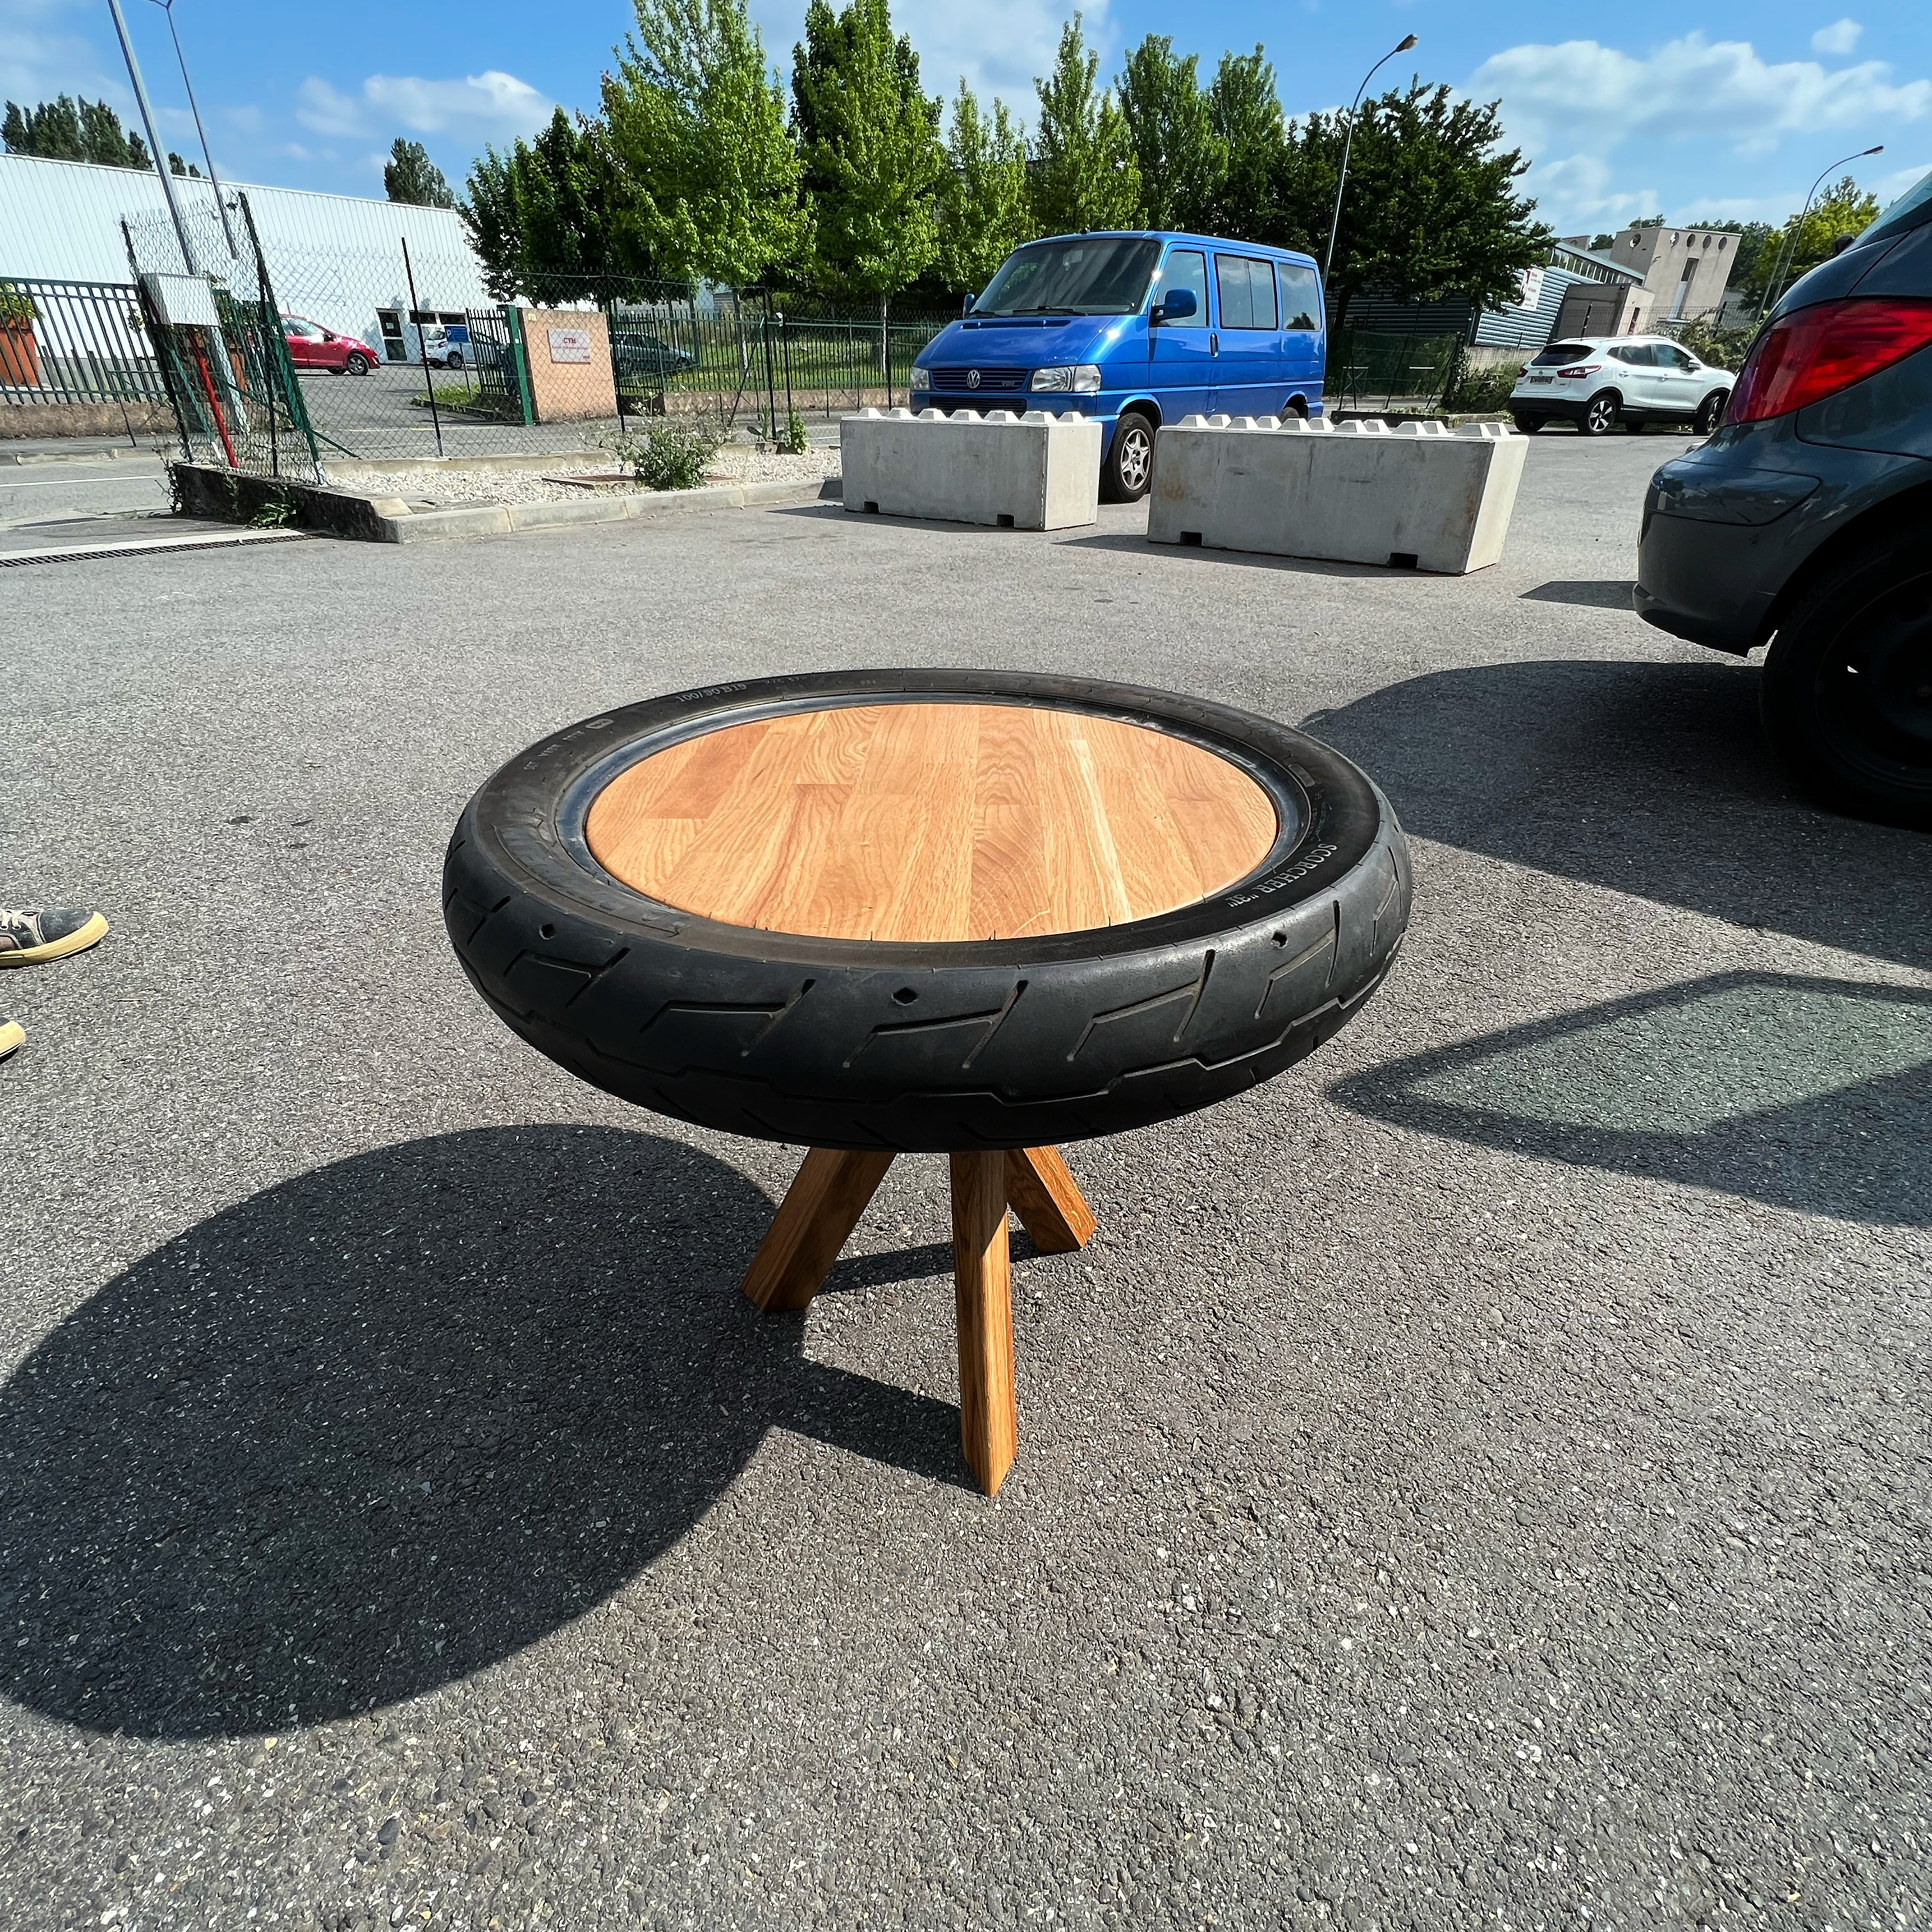 Table basse en chêne avec un pneu de moto